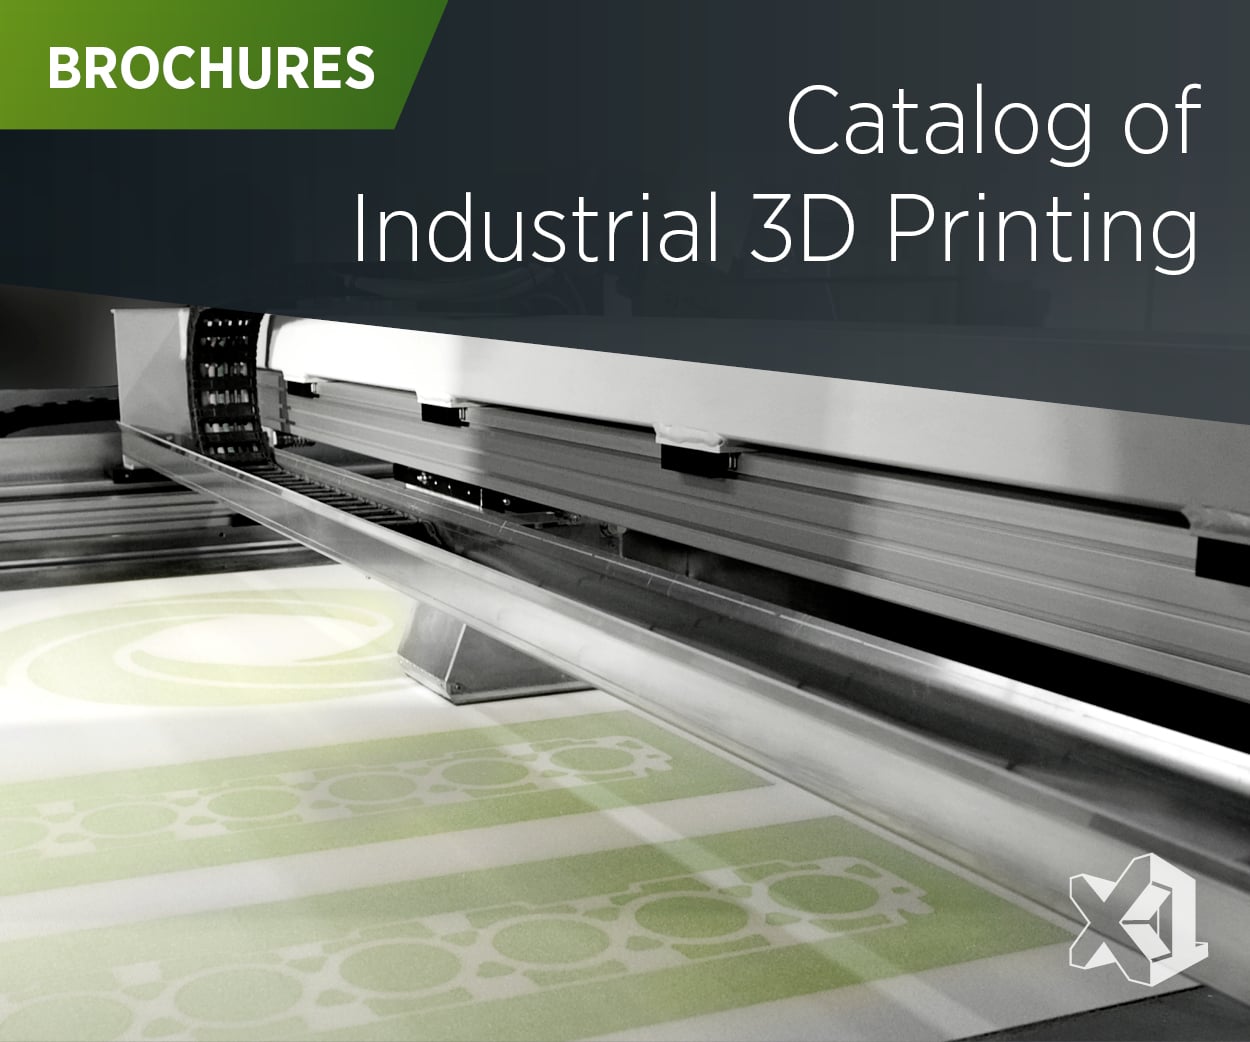 Catalog of Industrial 3D Printers